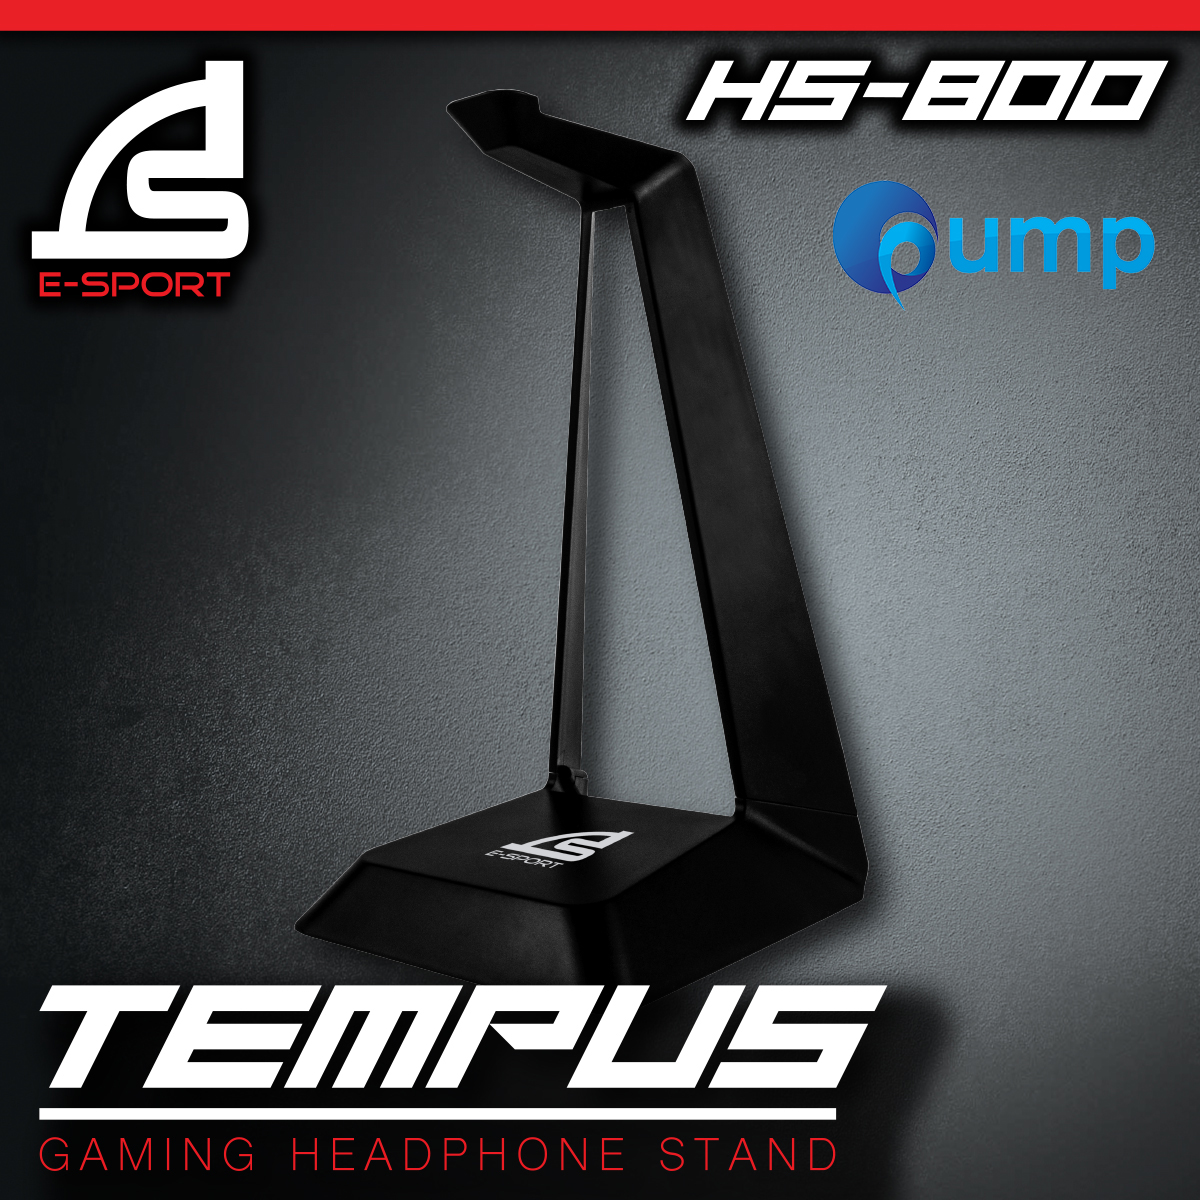 Signo E-Sport HS-800 TEMPUS Gaming Headphone Stand